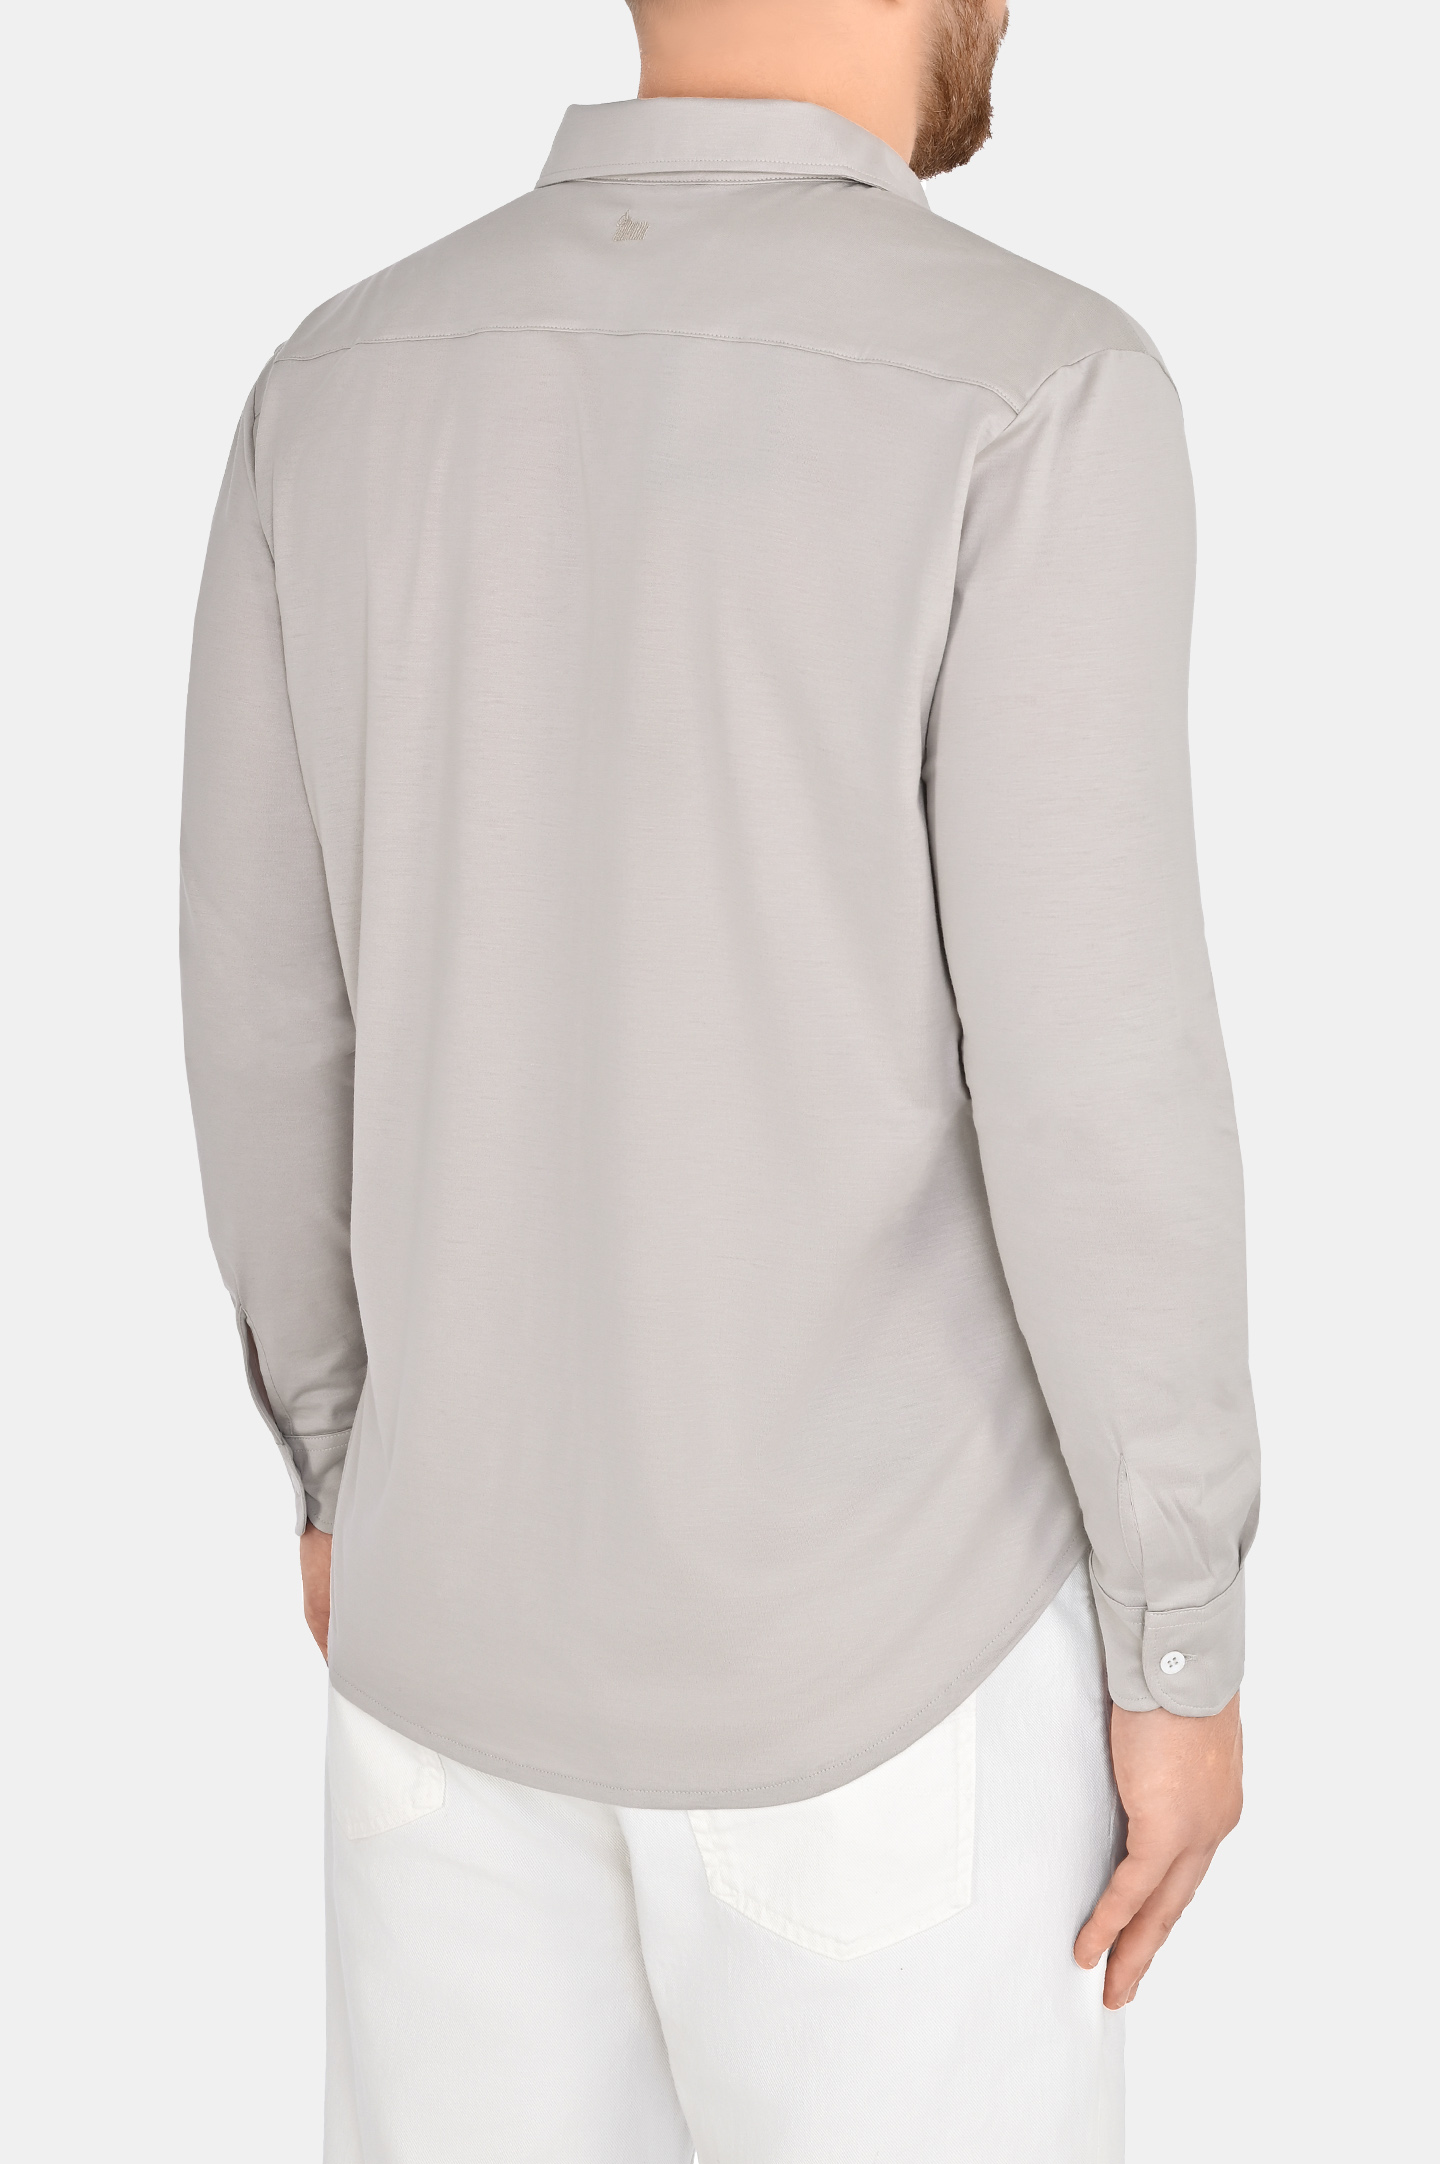 Рубашка из шелка и хлопка COLOMBO TS00382/-/A00897, цвет: Светло-бежевый, Мужской